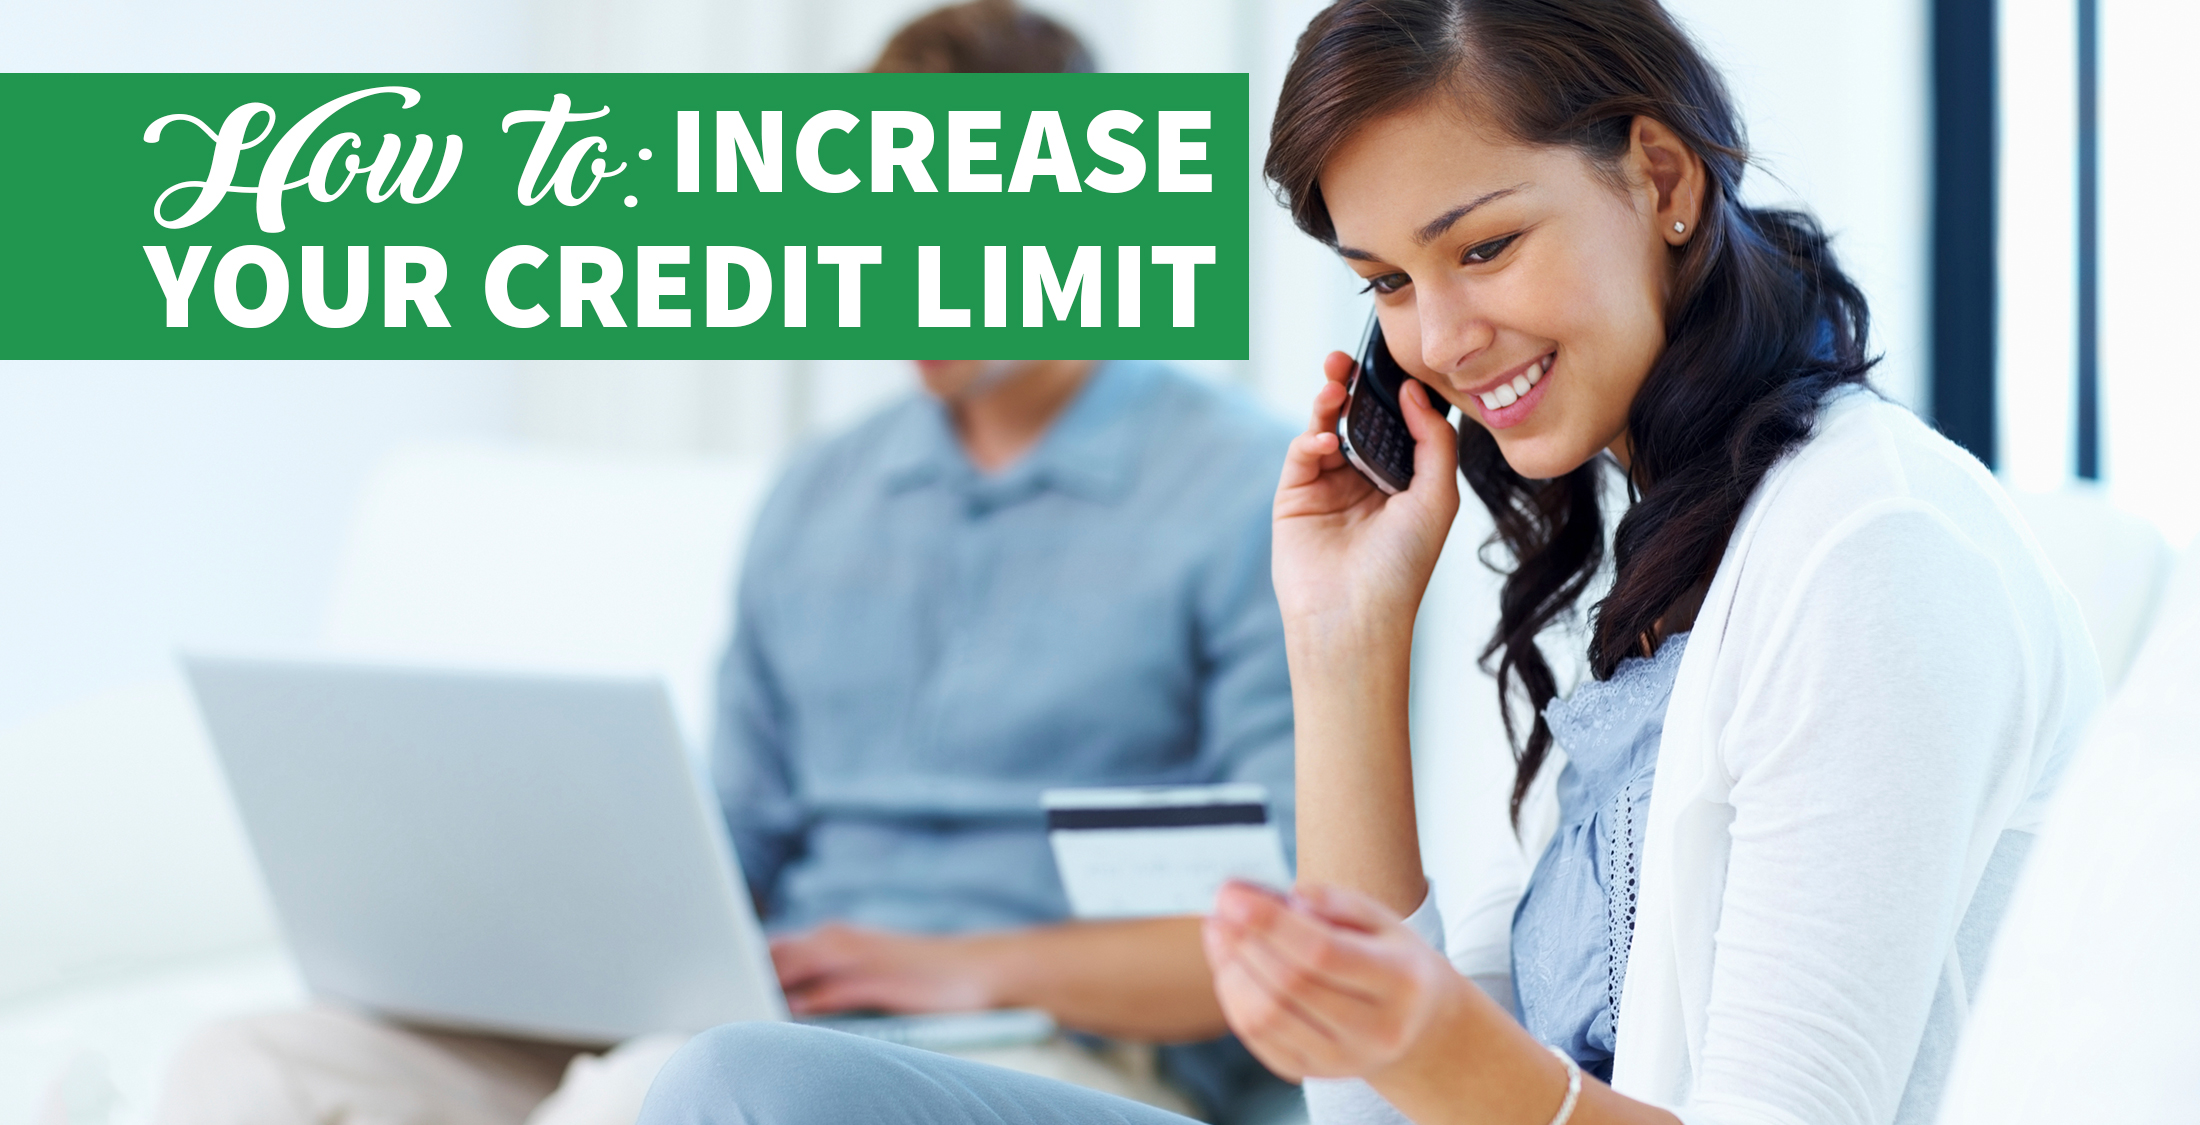 Should increase. Credit limit. Credit limit $15.00. Customer credit перевод. Increase limits.